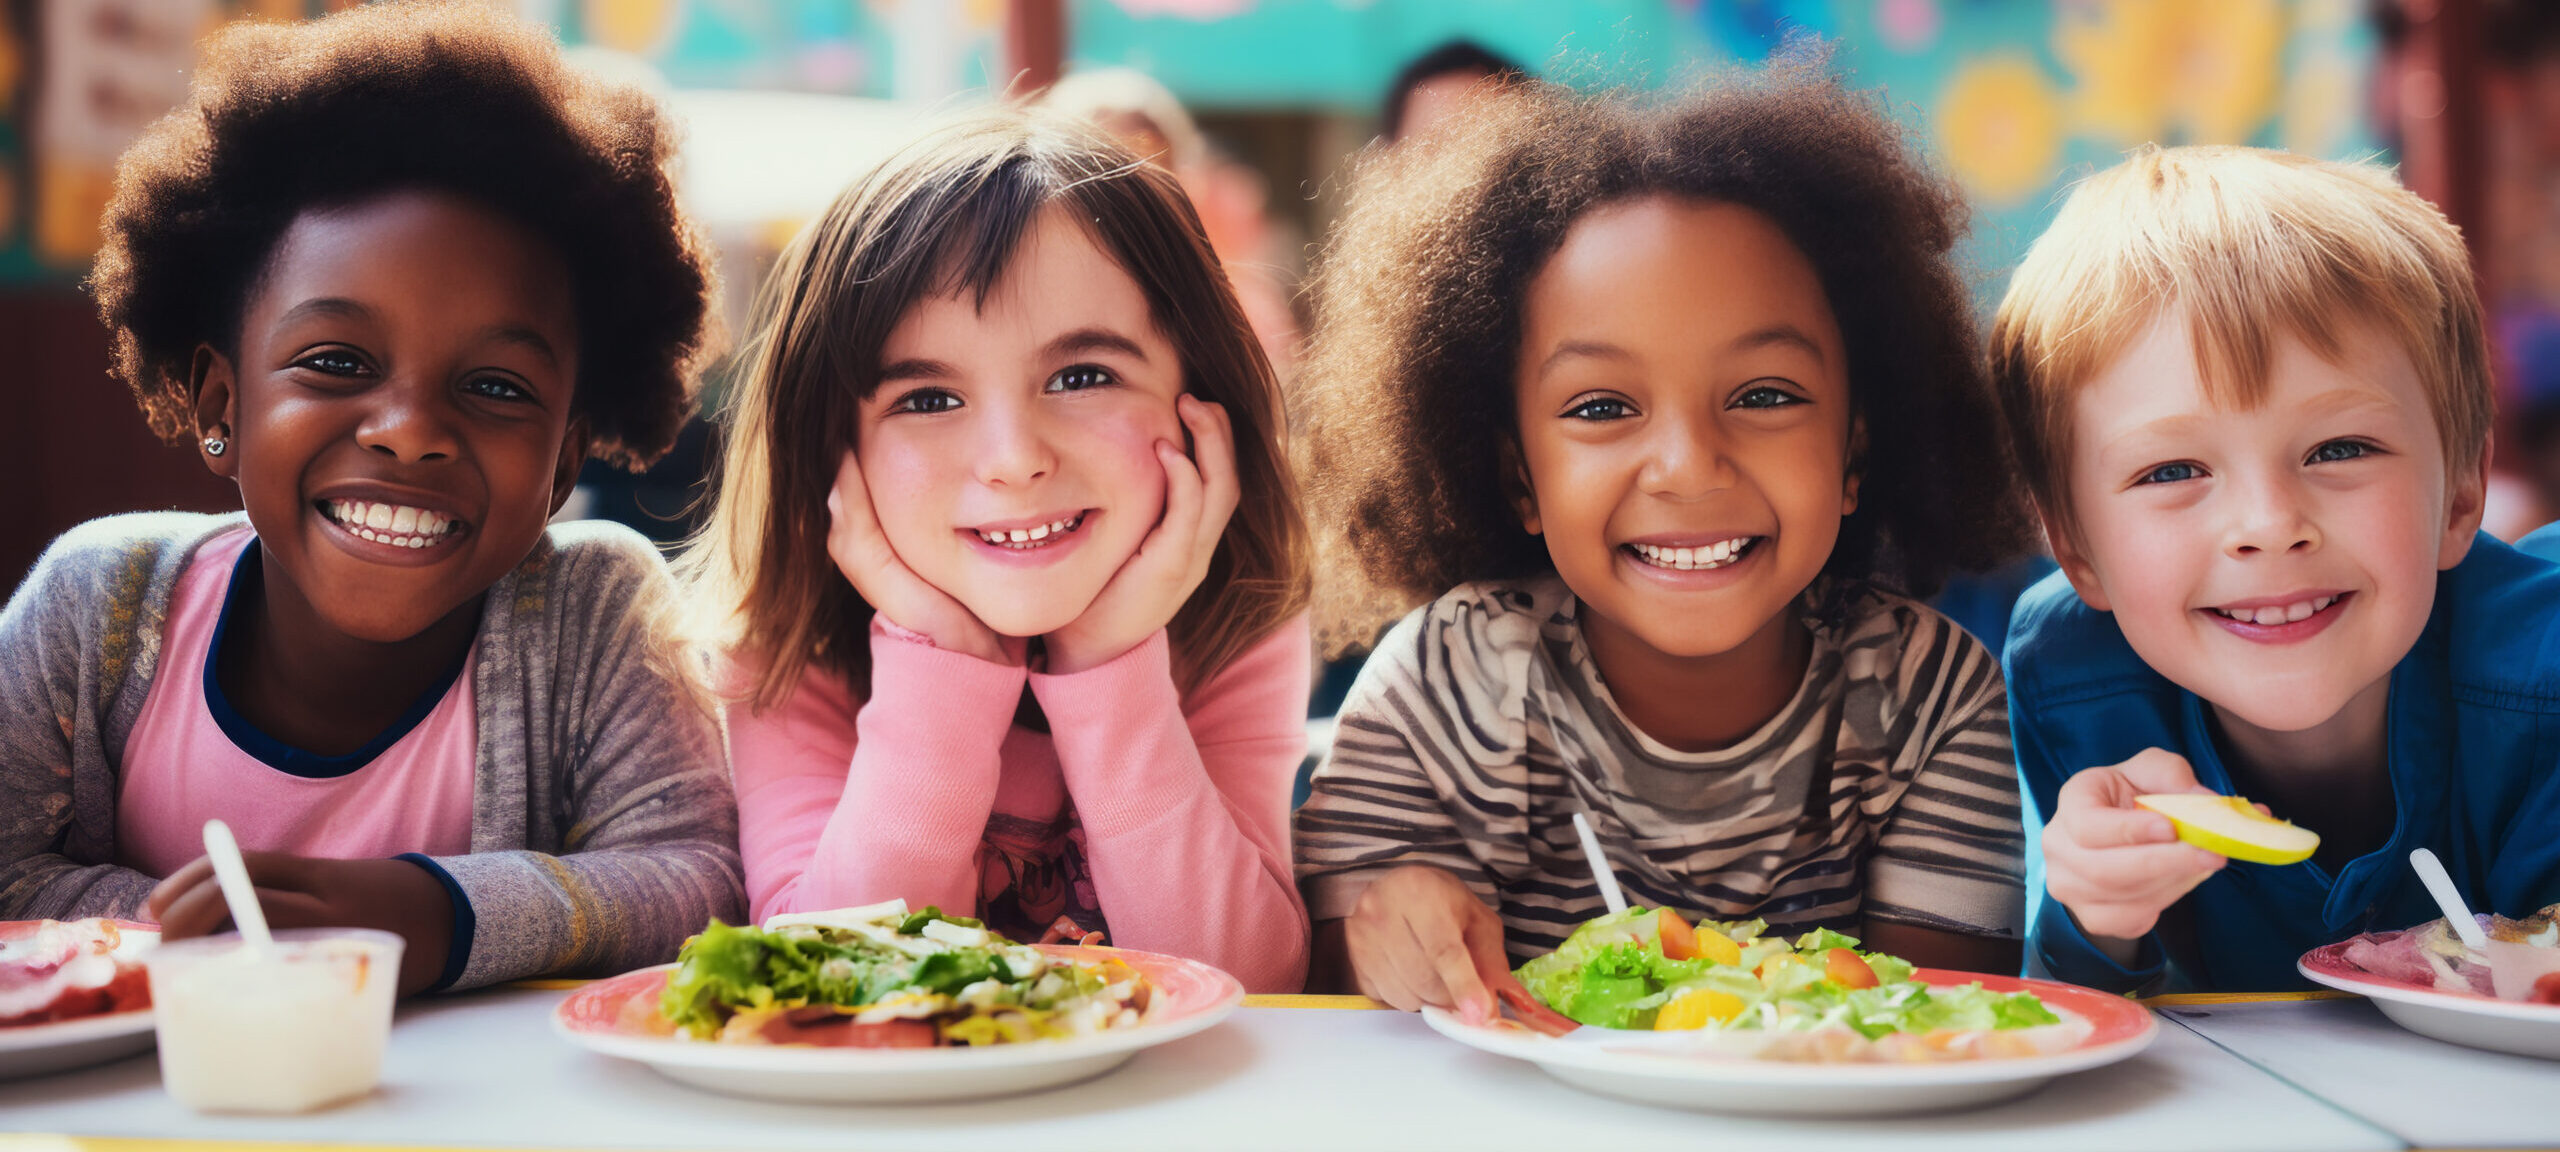 Happy and joyful children eating healthy food in the schoolyard. Back to school concept.